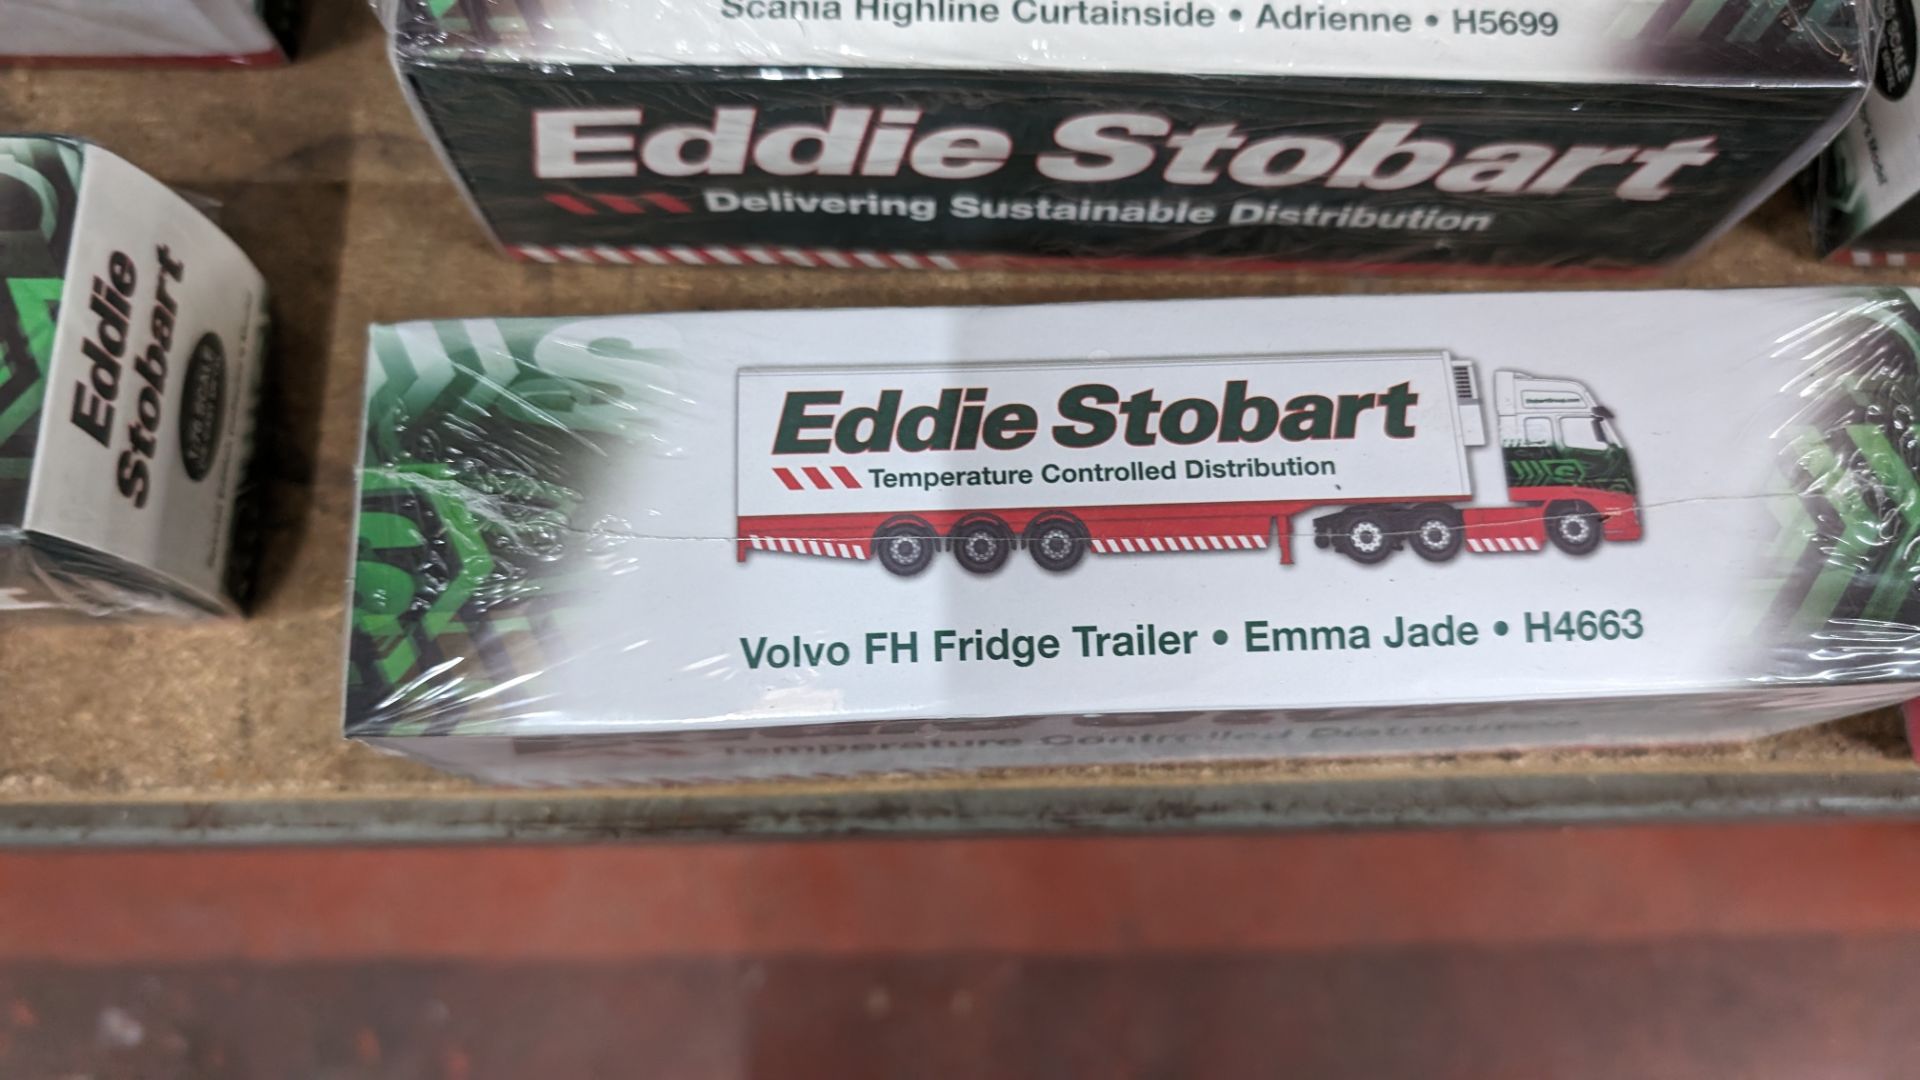 10 assorted Eddie Stobart Atlas Editions model trucks - Image 8 of 13